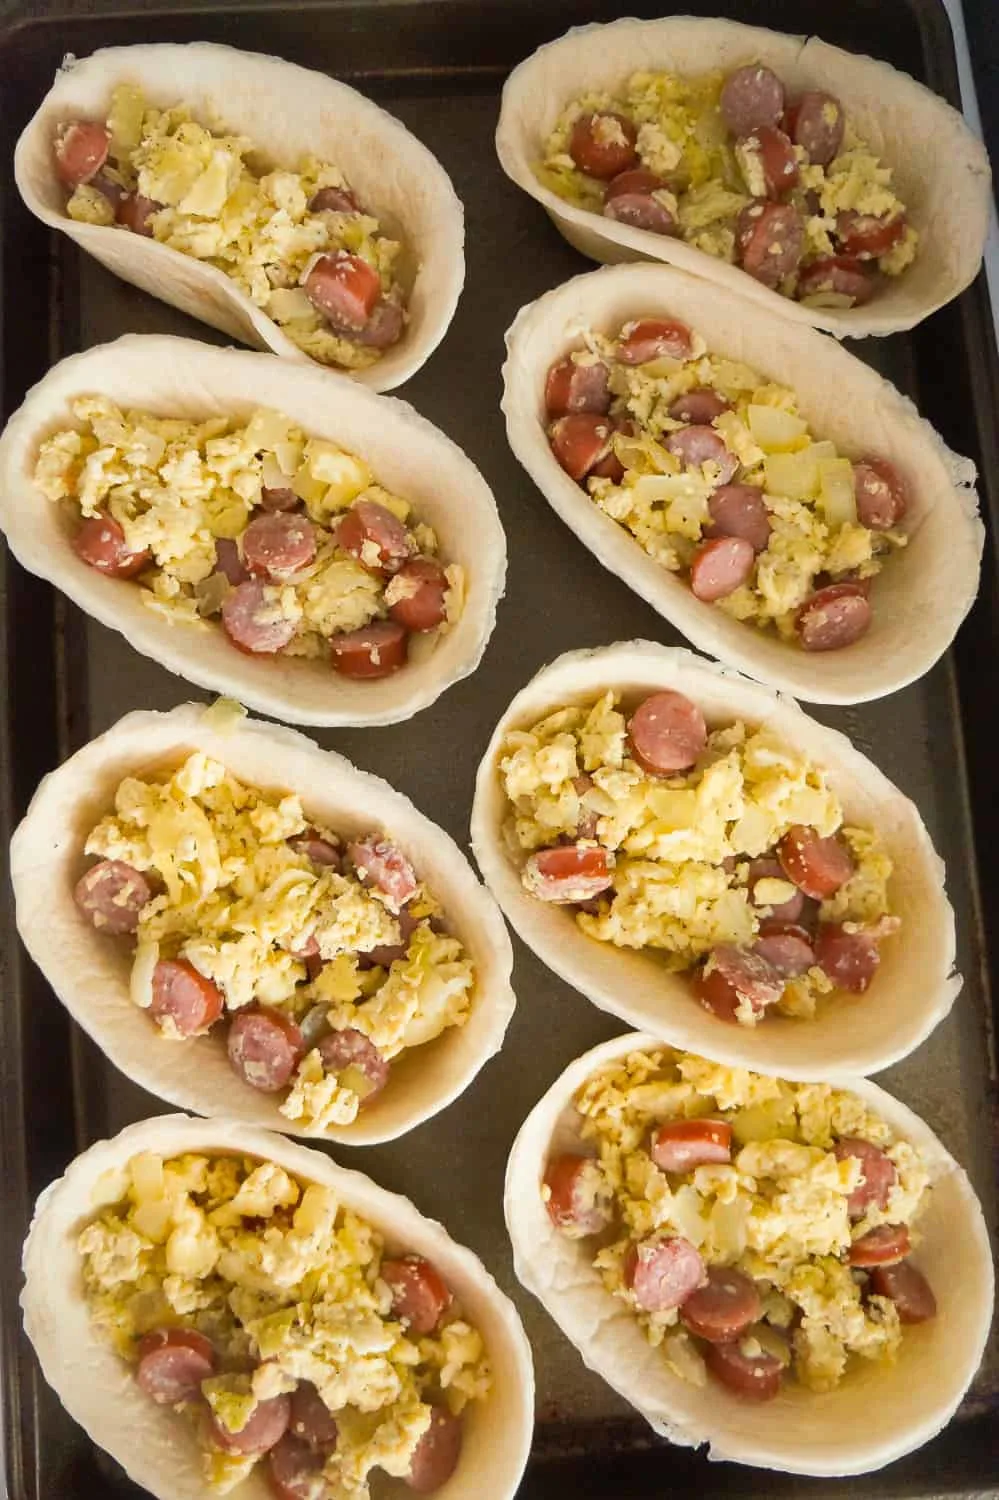 egg and sausage in tortilla bowls